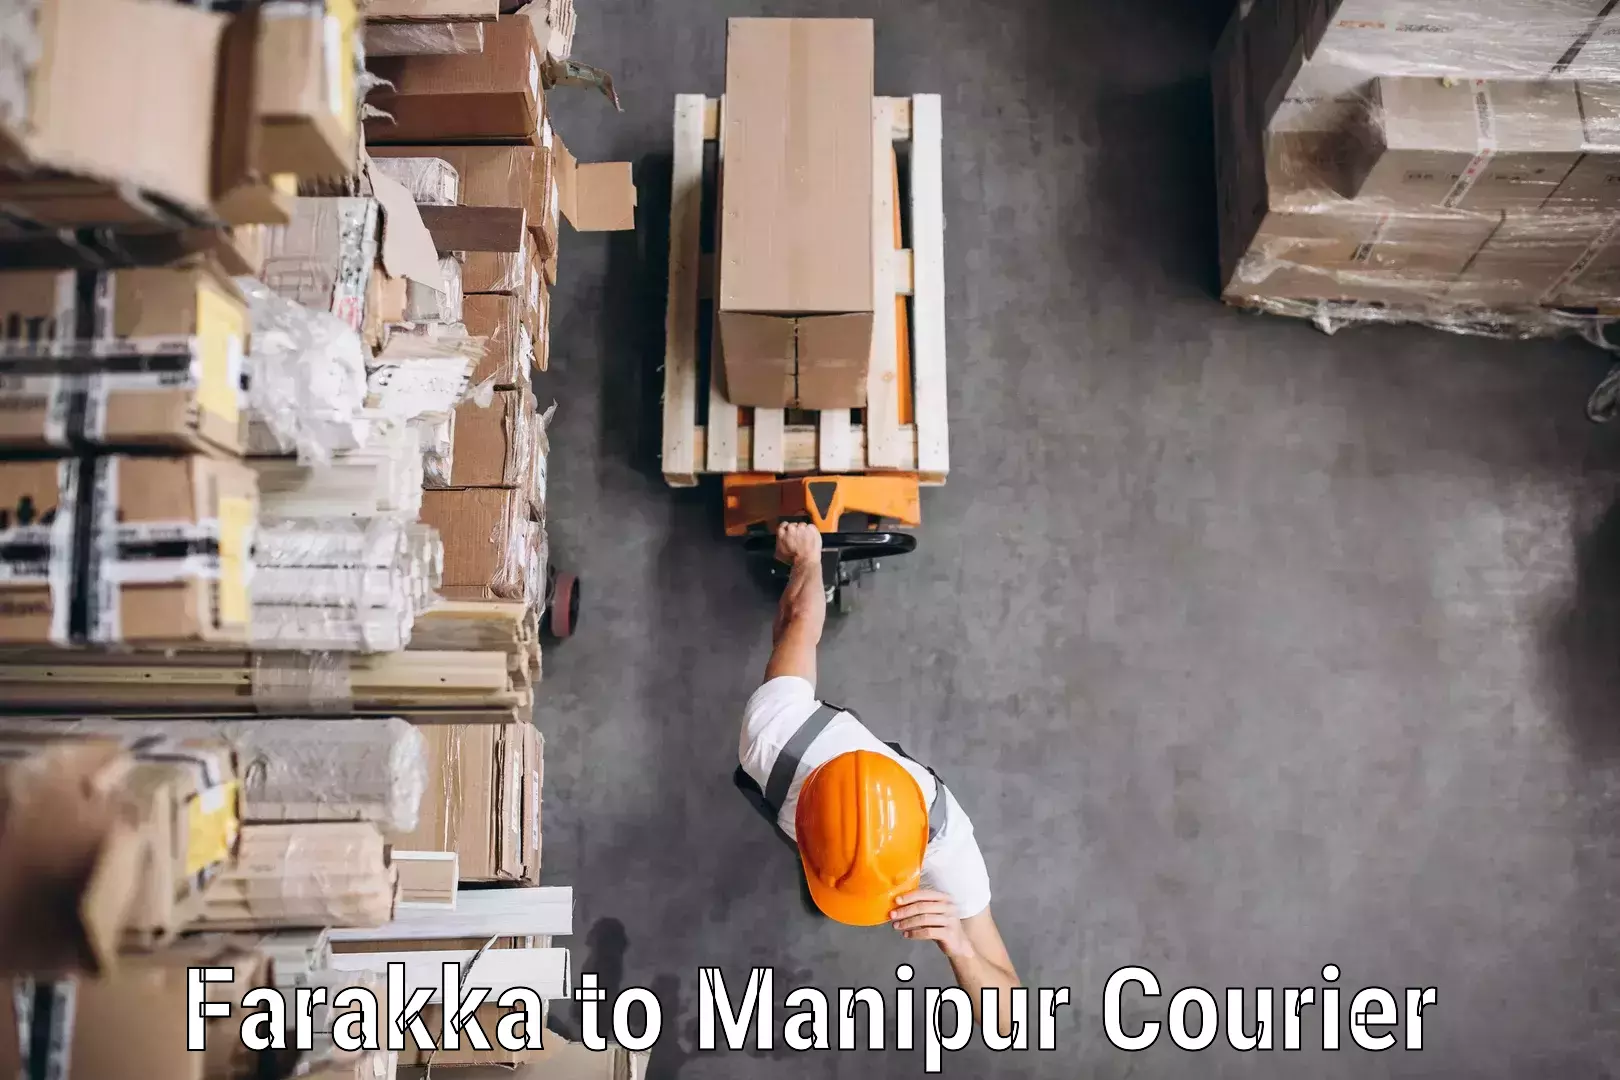 Global logistics network Farakka to Manipur